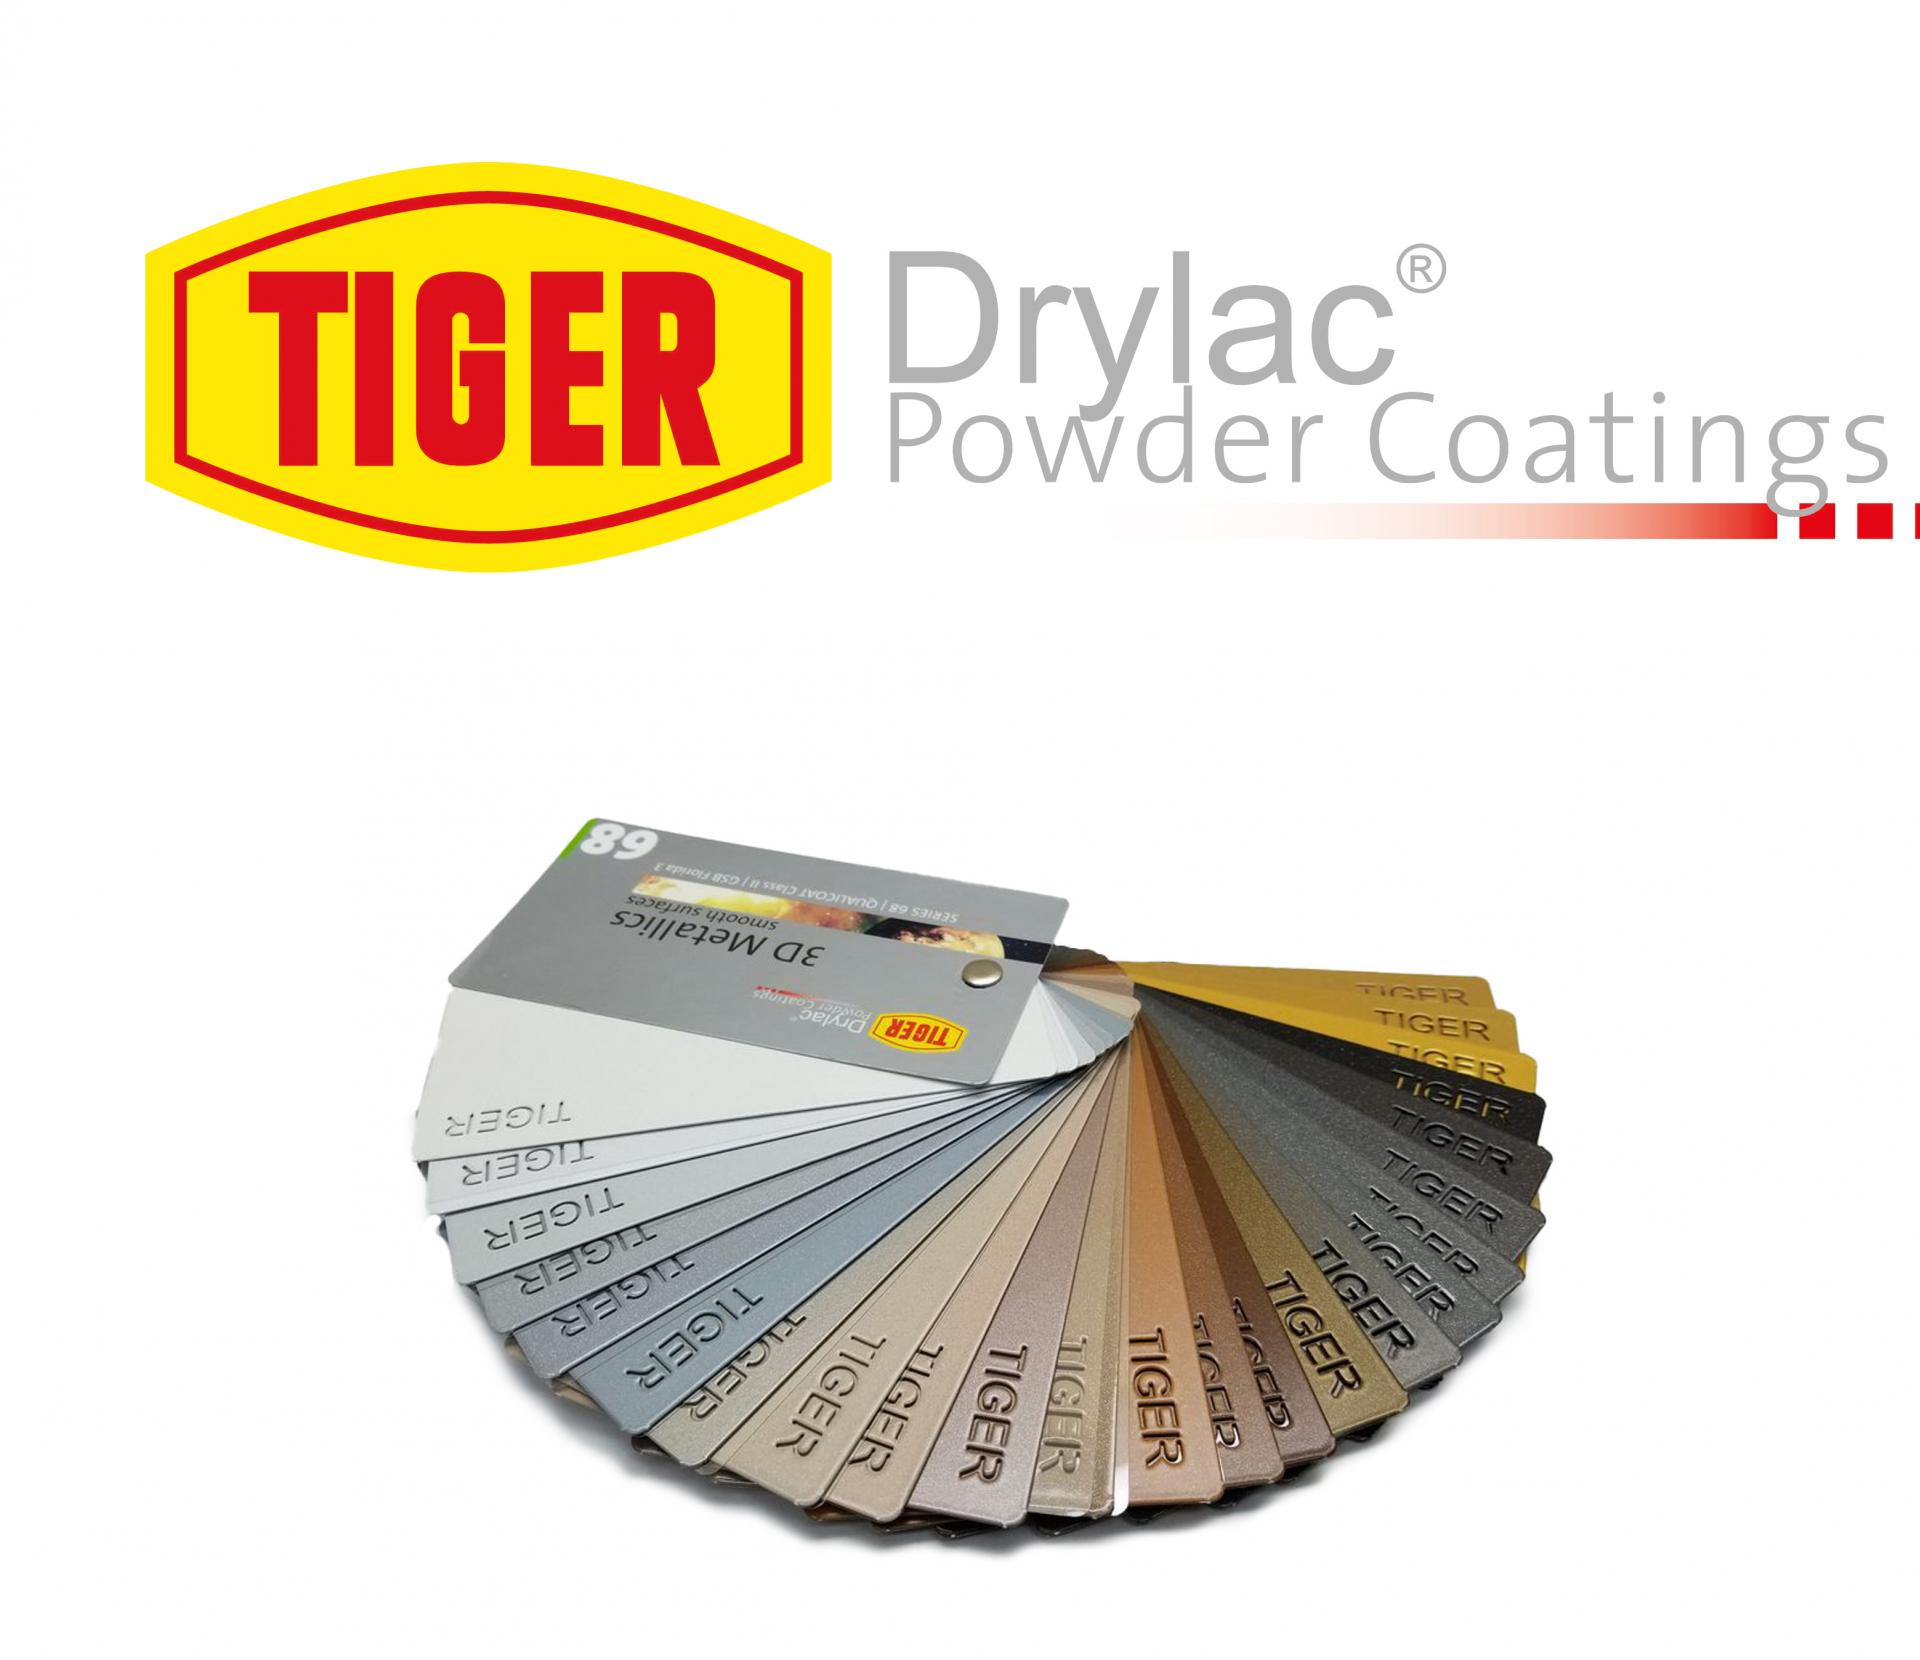 Tiger Drylac powder coatings customer story